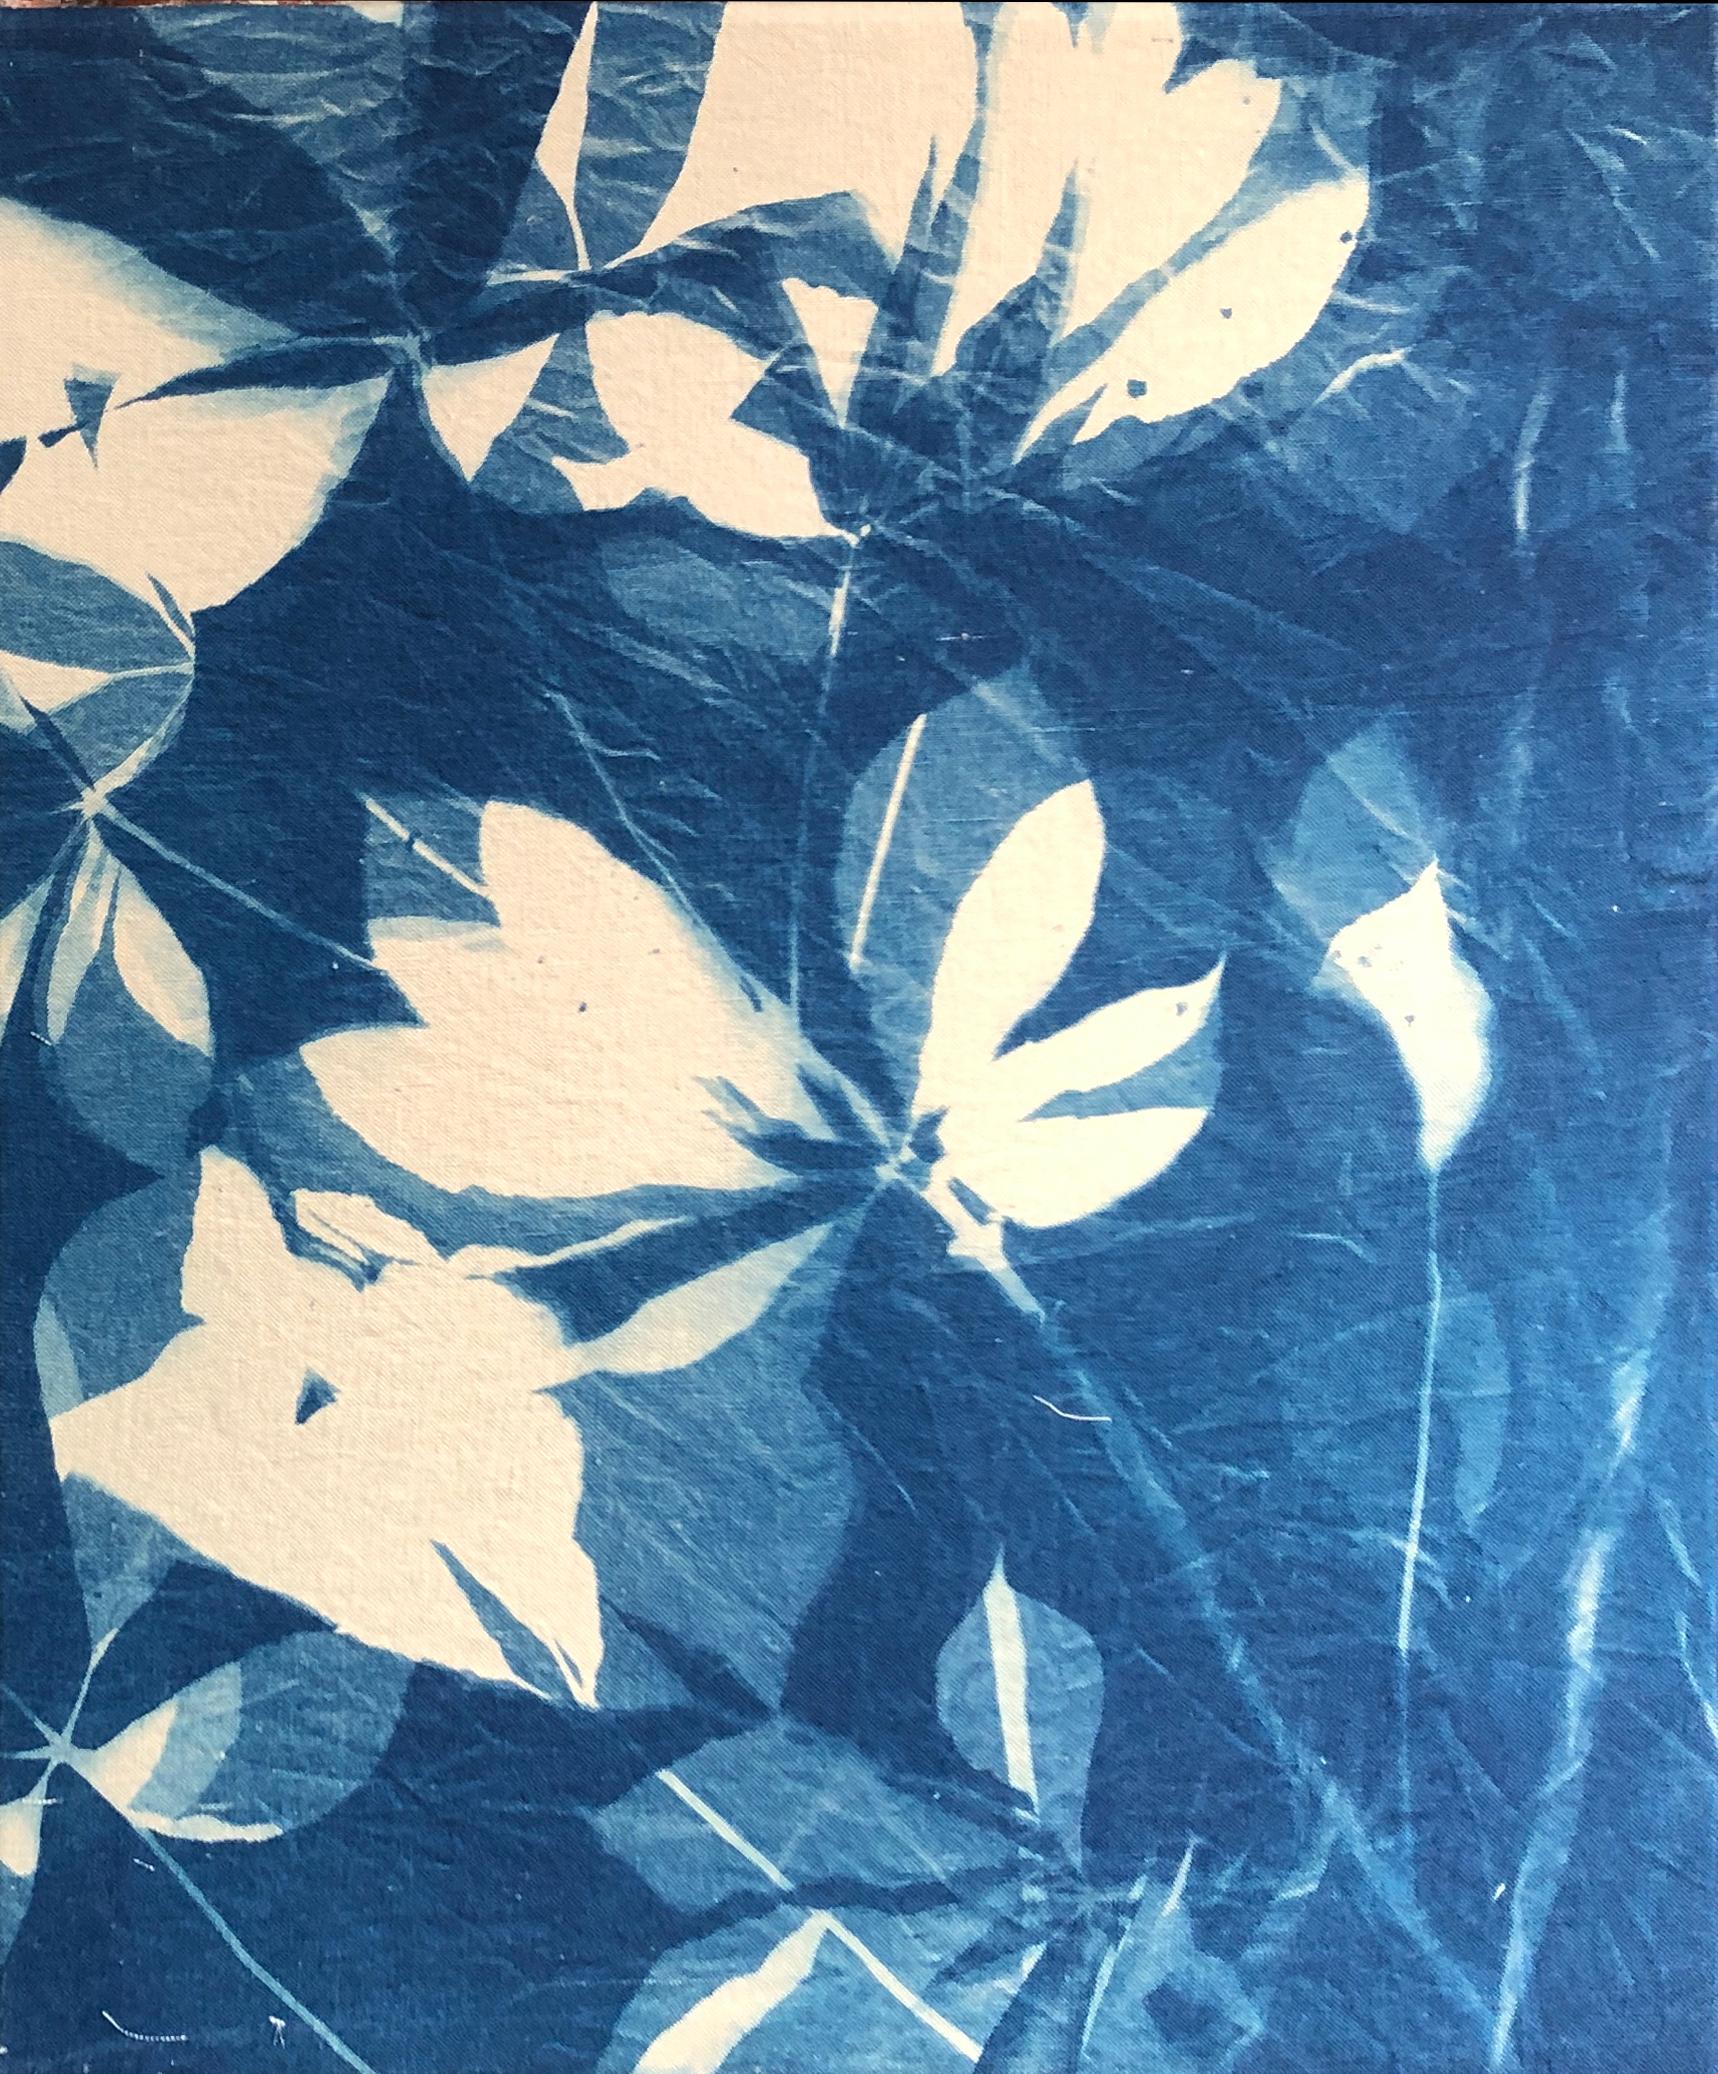 Landscape Photograph Marie Craig - "Buckeye", contemporain, arbre, feuilles, bleu, cyanotype, photographie